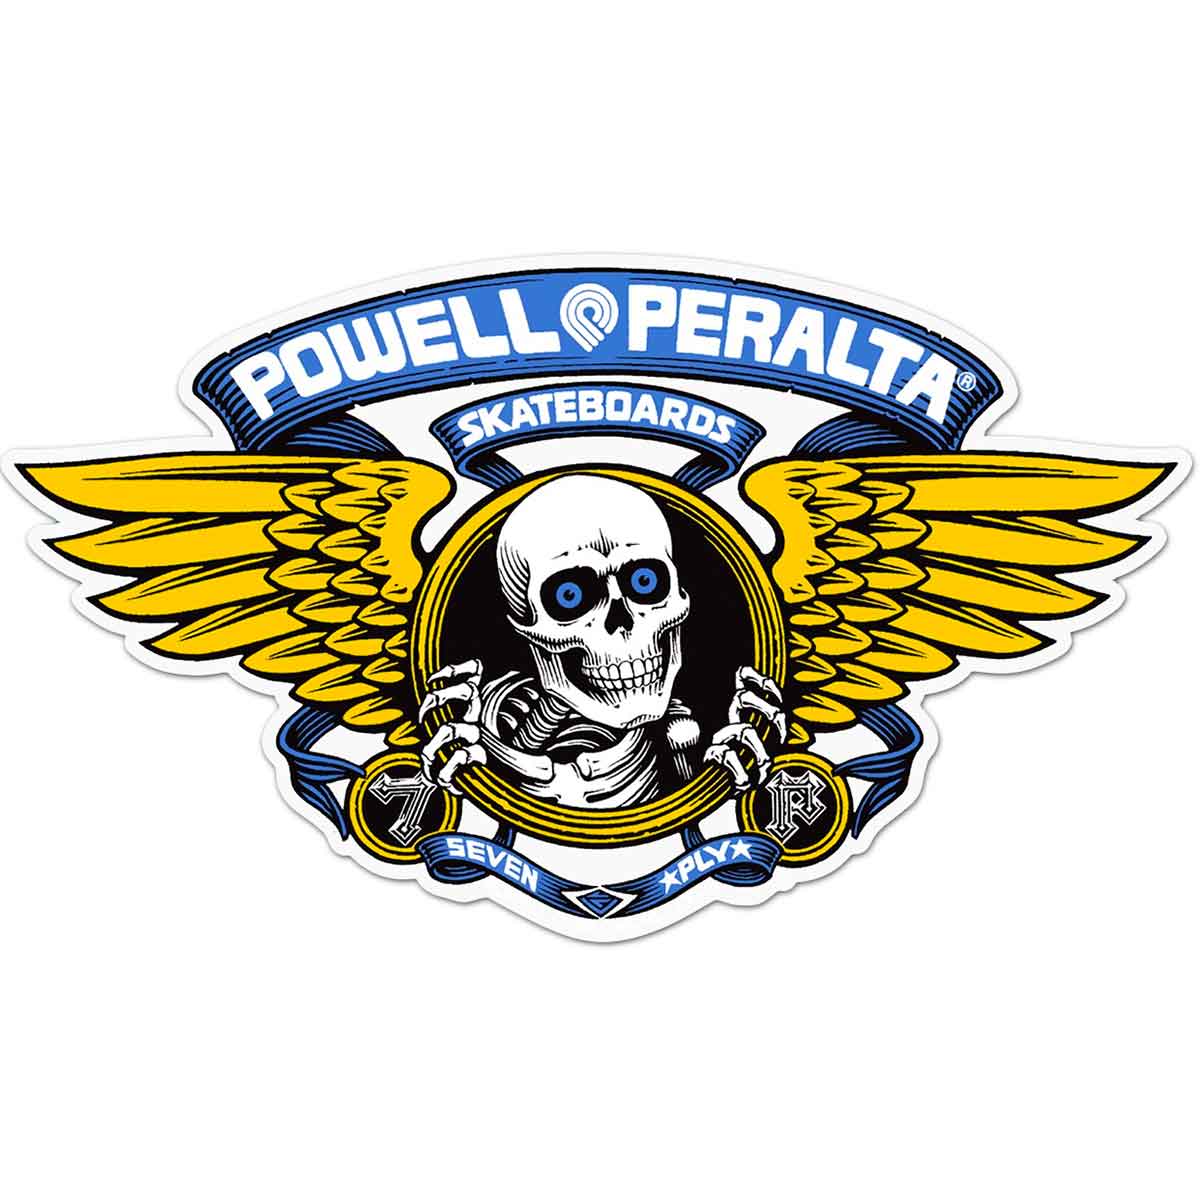 5" Winged Ripper Die-Cut Sticker Blue Powell Peralta 